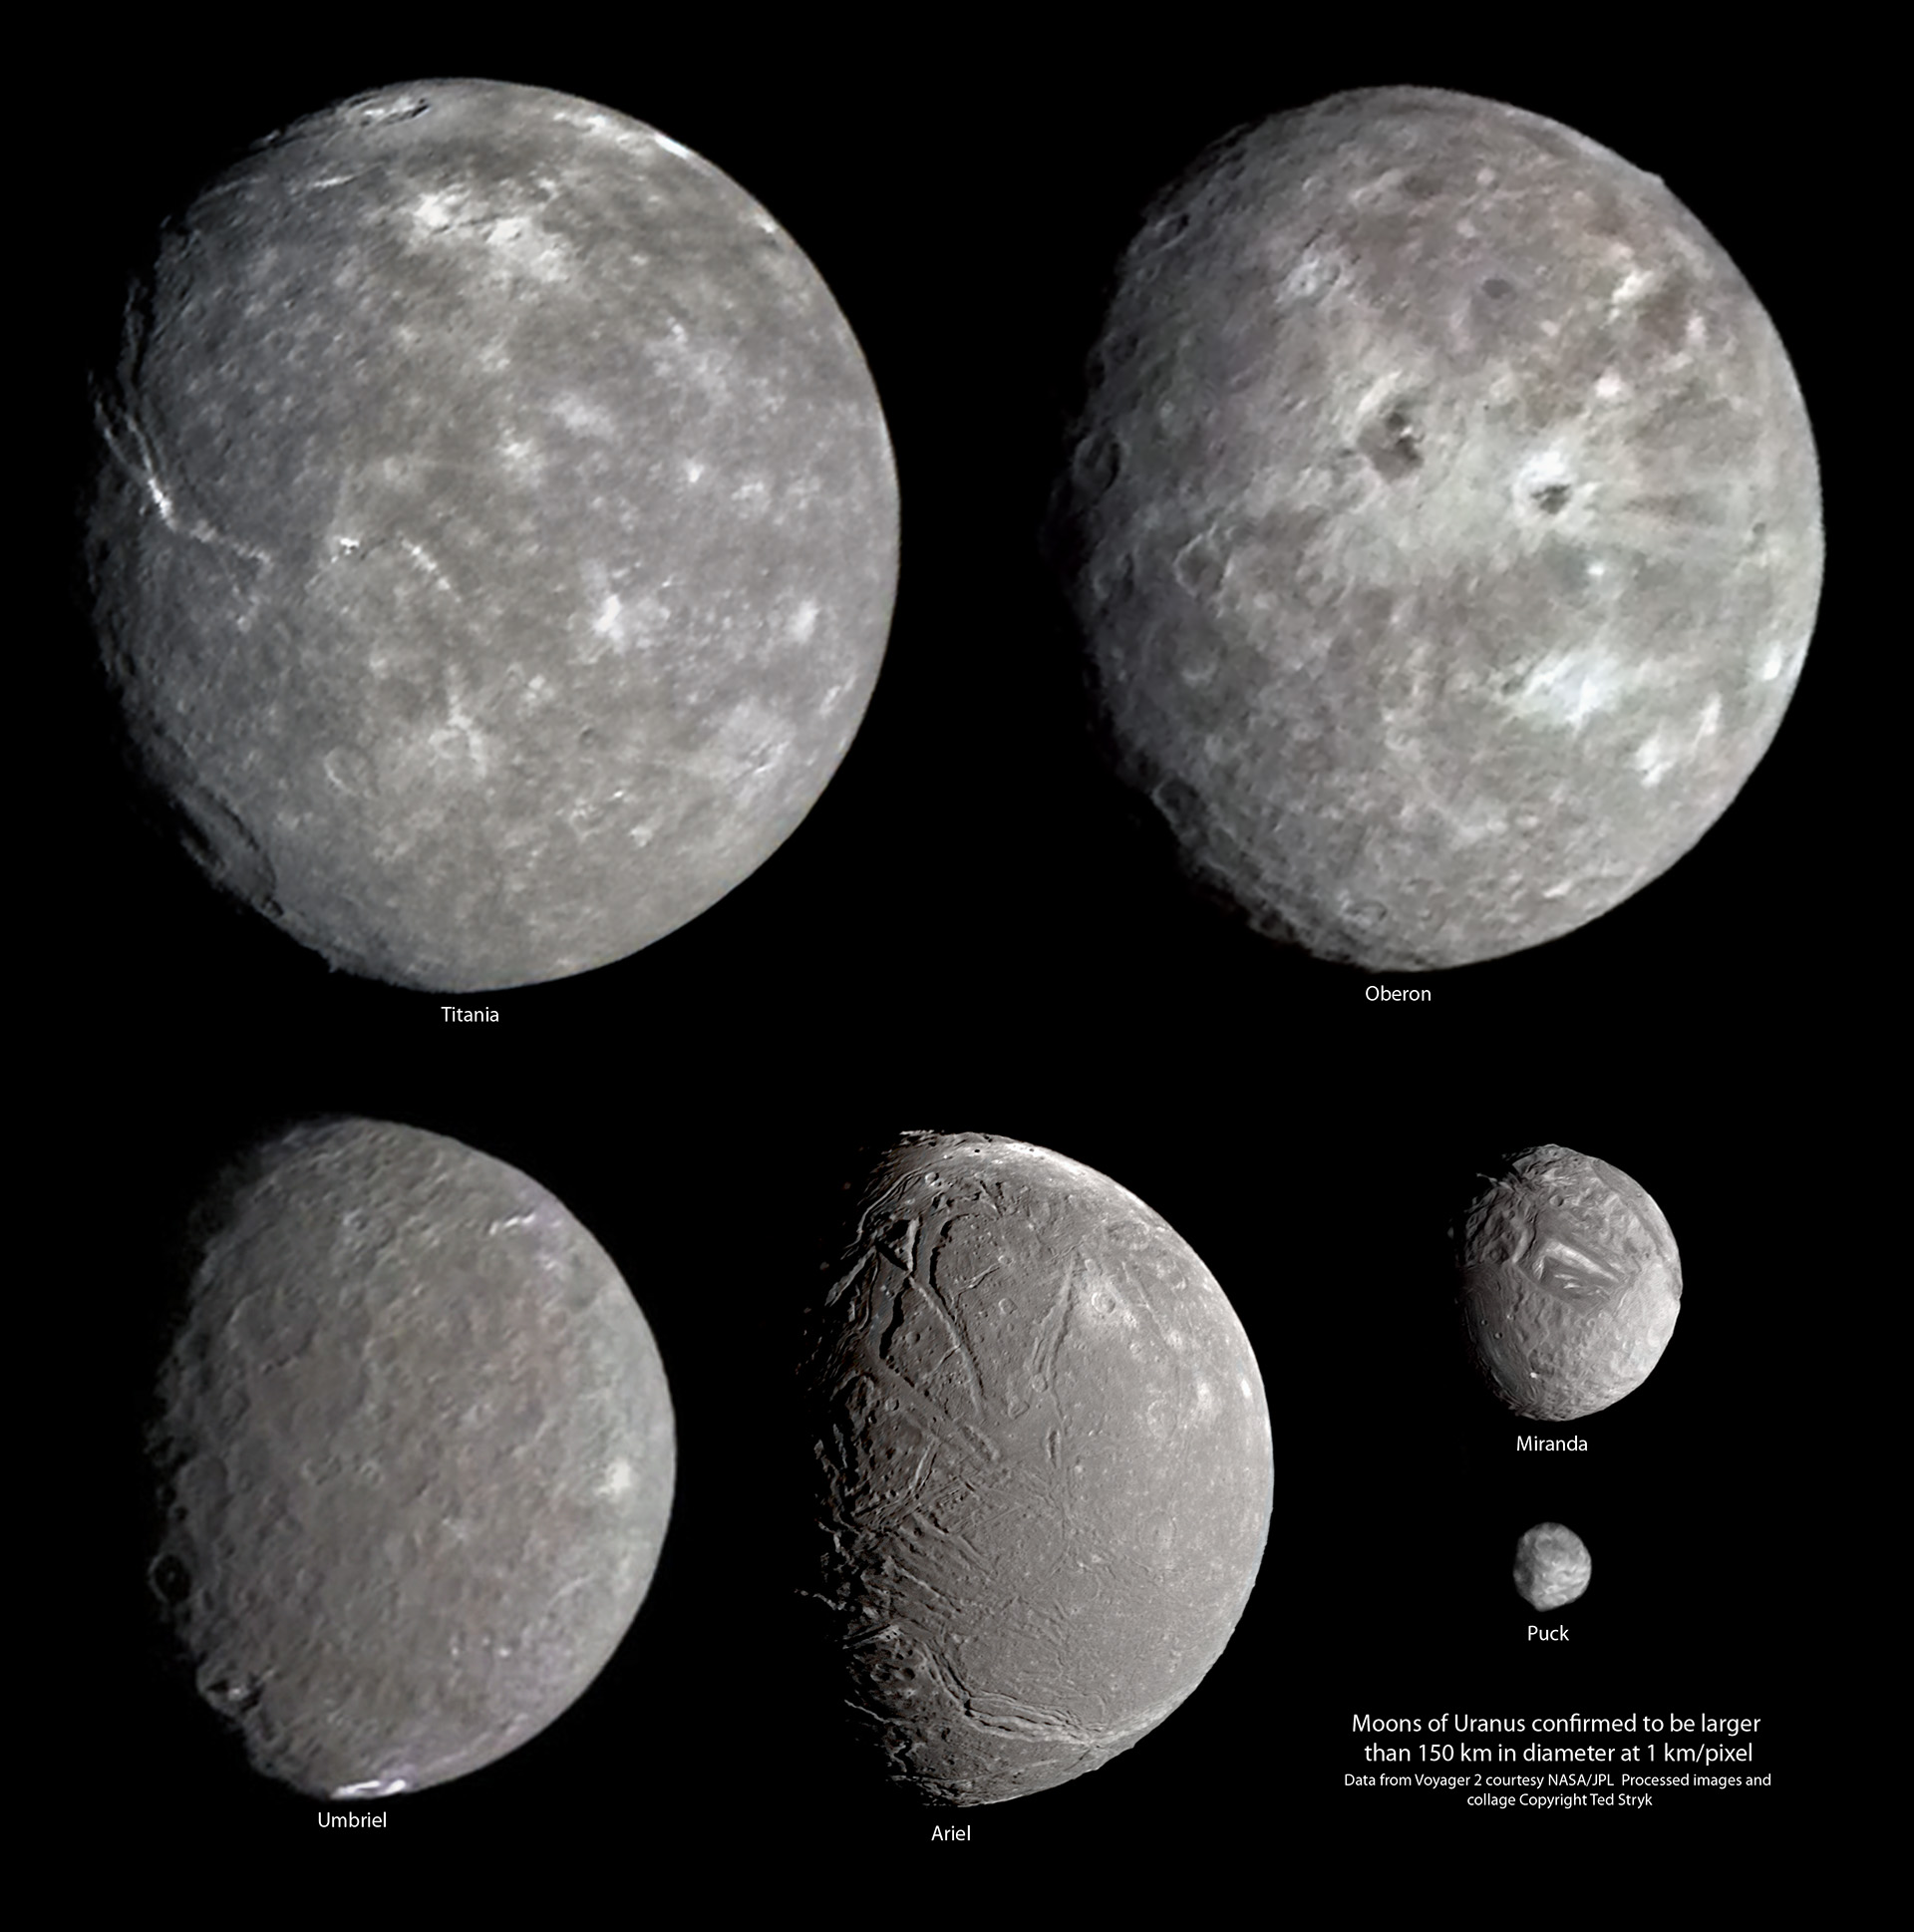 Uranus-20180418_moons-larger-than-150-km-correct-uranus-a